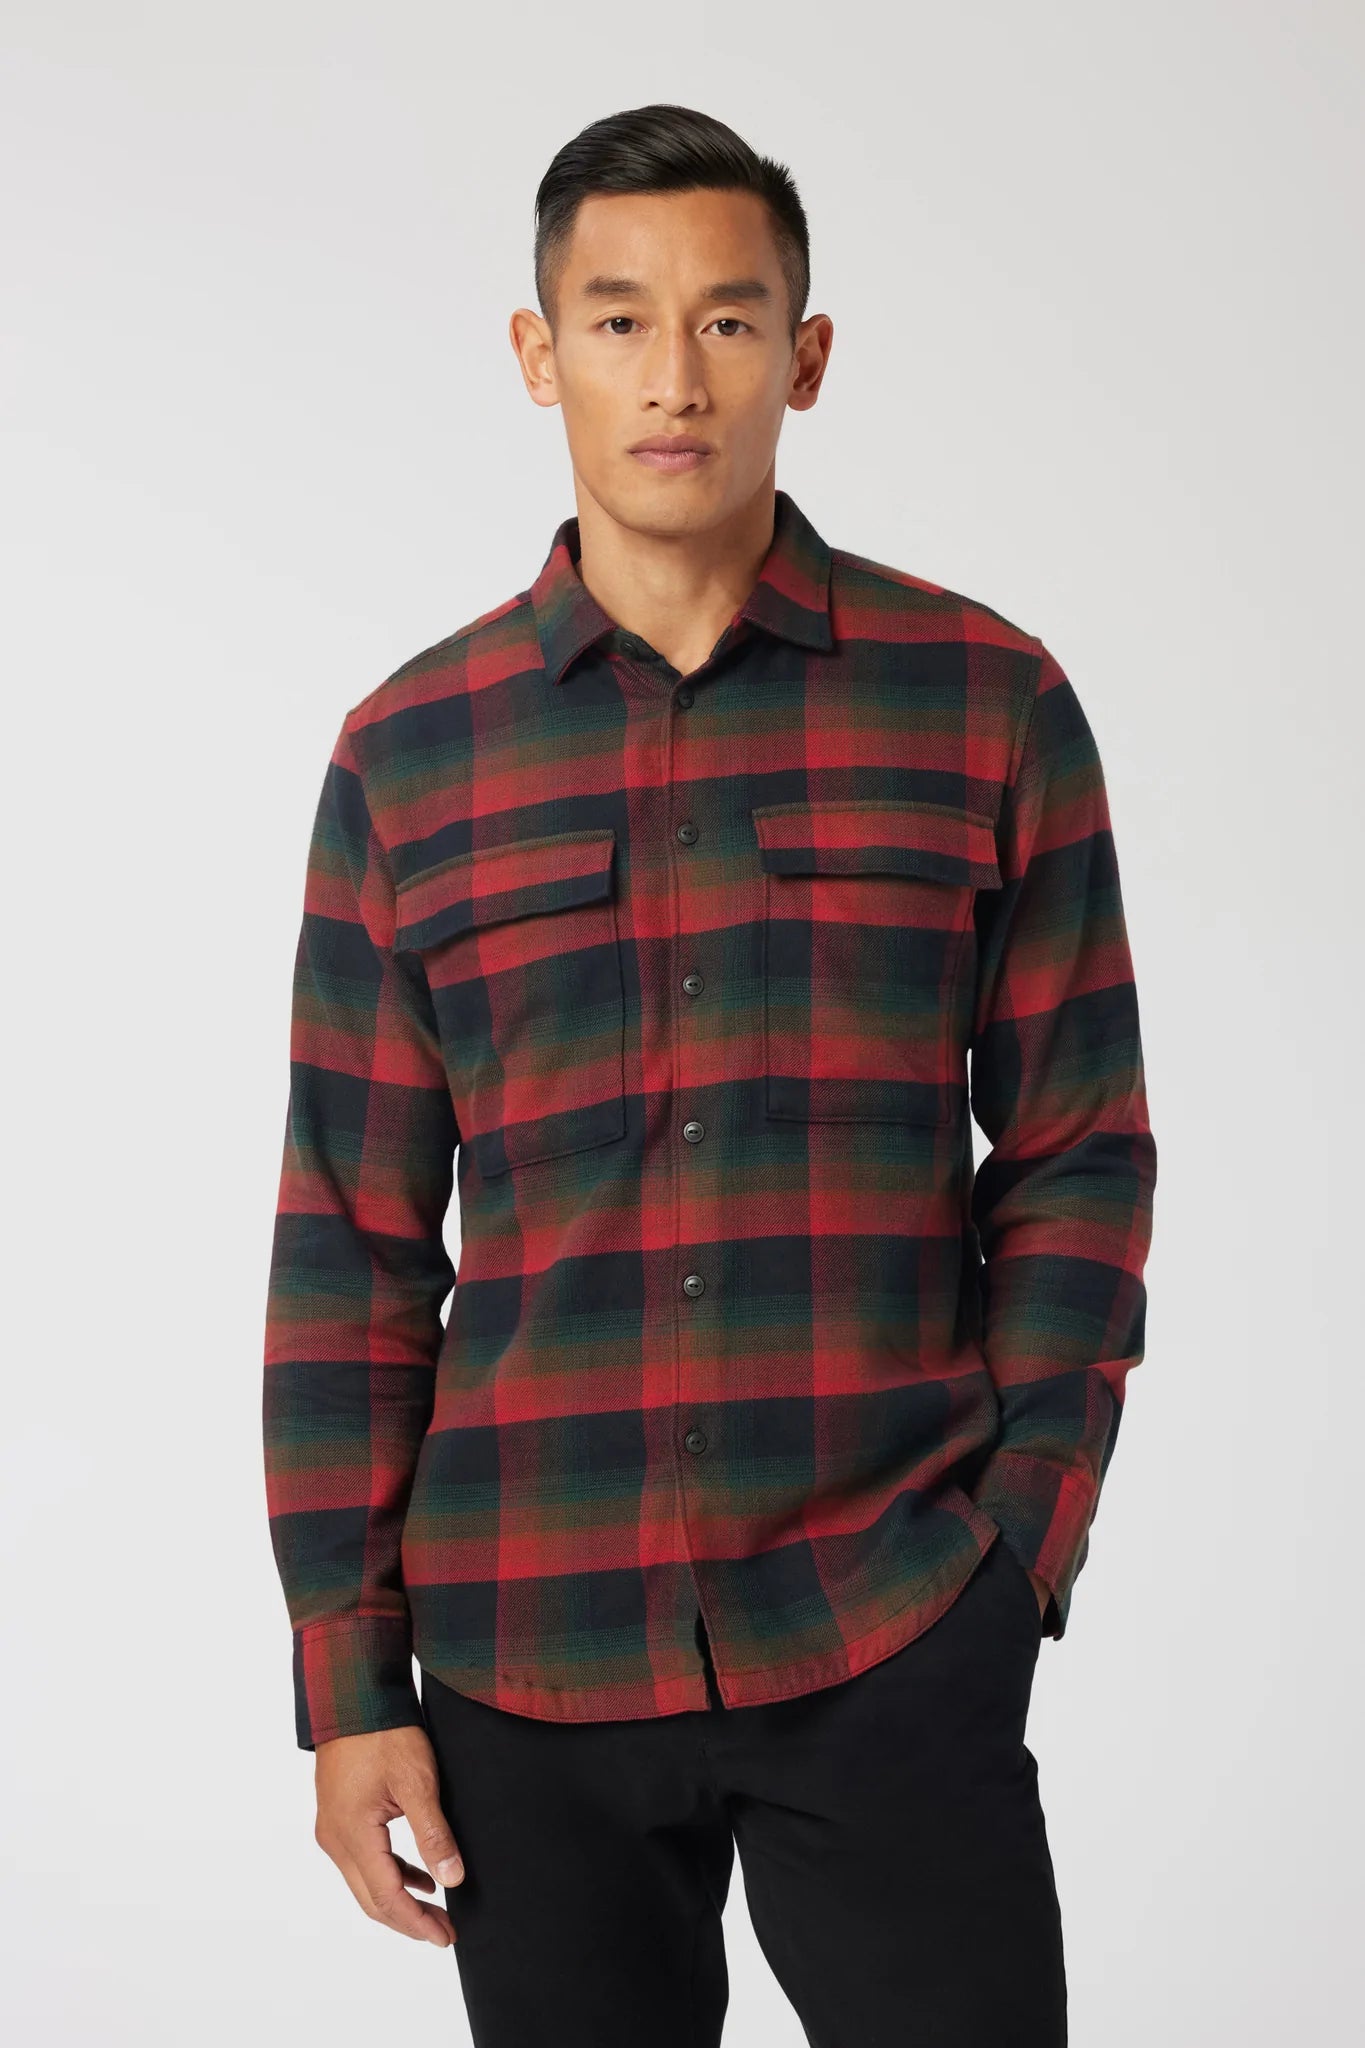 Good Man Brand Stadium Shirt Jacket in Brushed Flannel -Black Red Fine Check